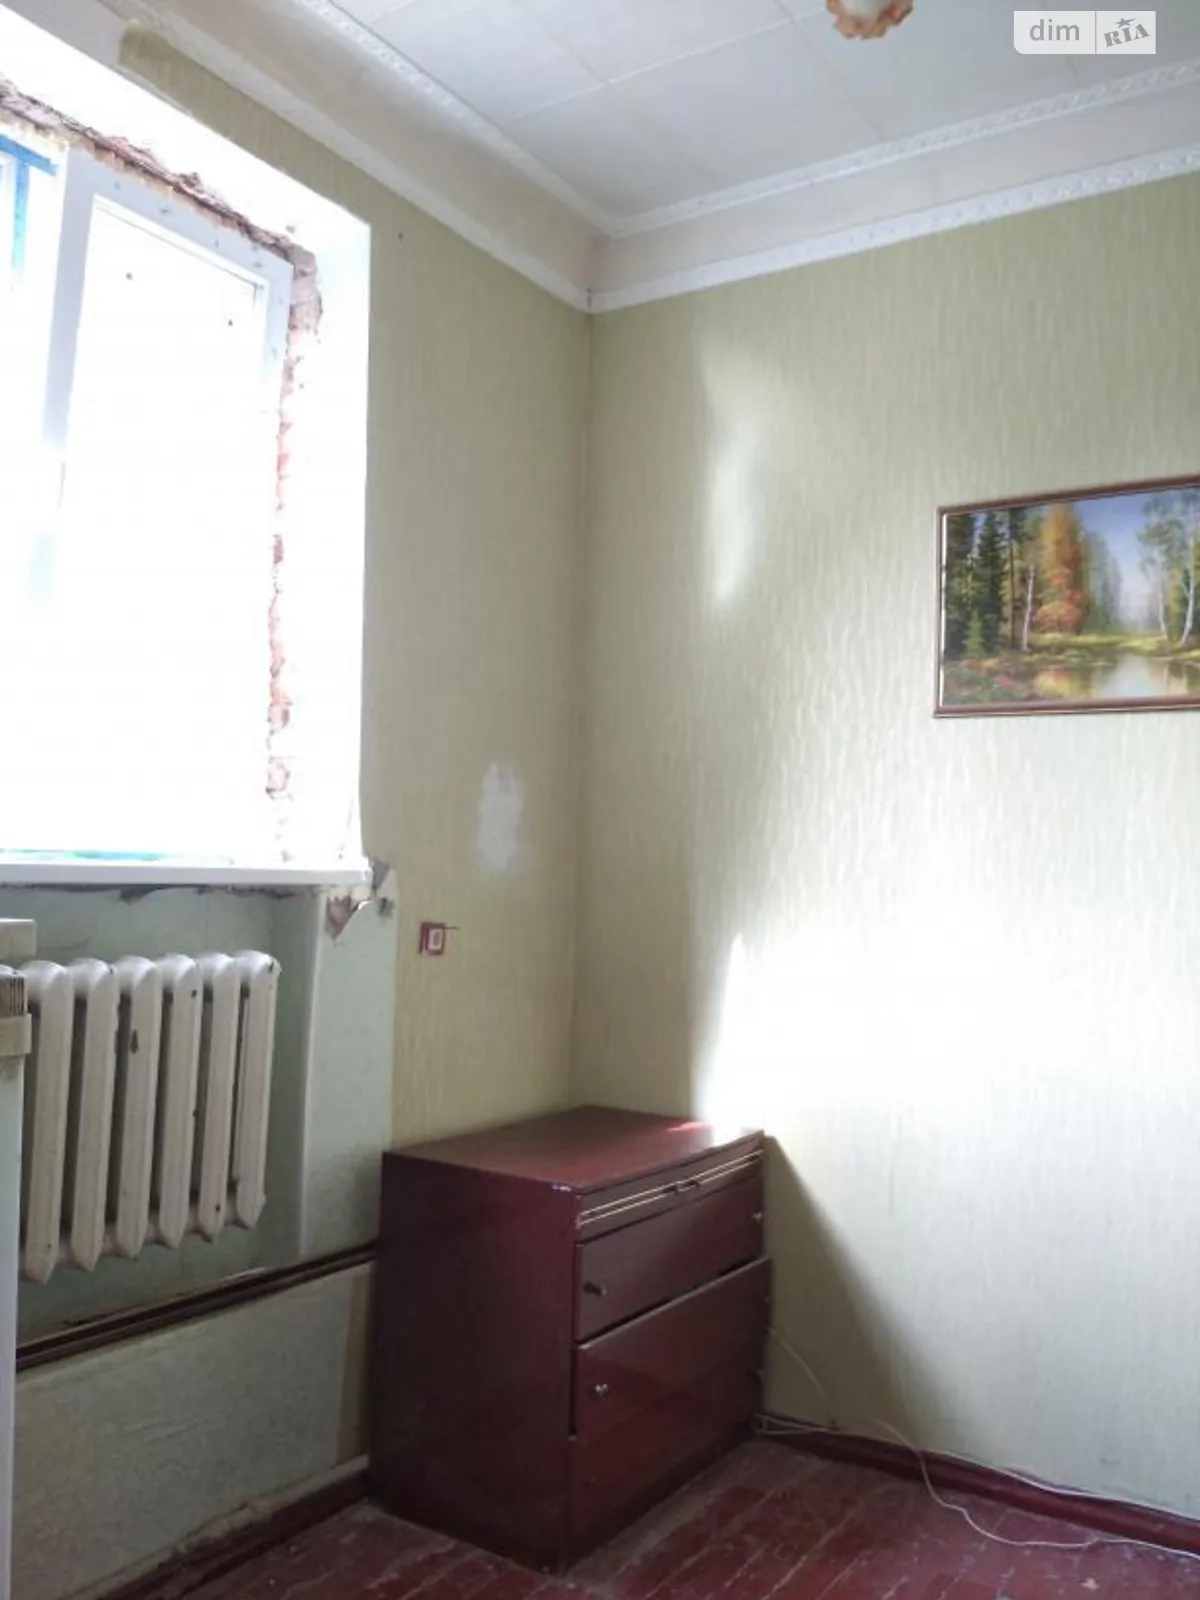 Продается комната 15 кв. м в Харькове - фото 3